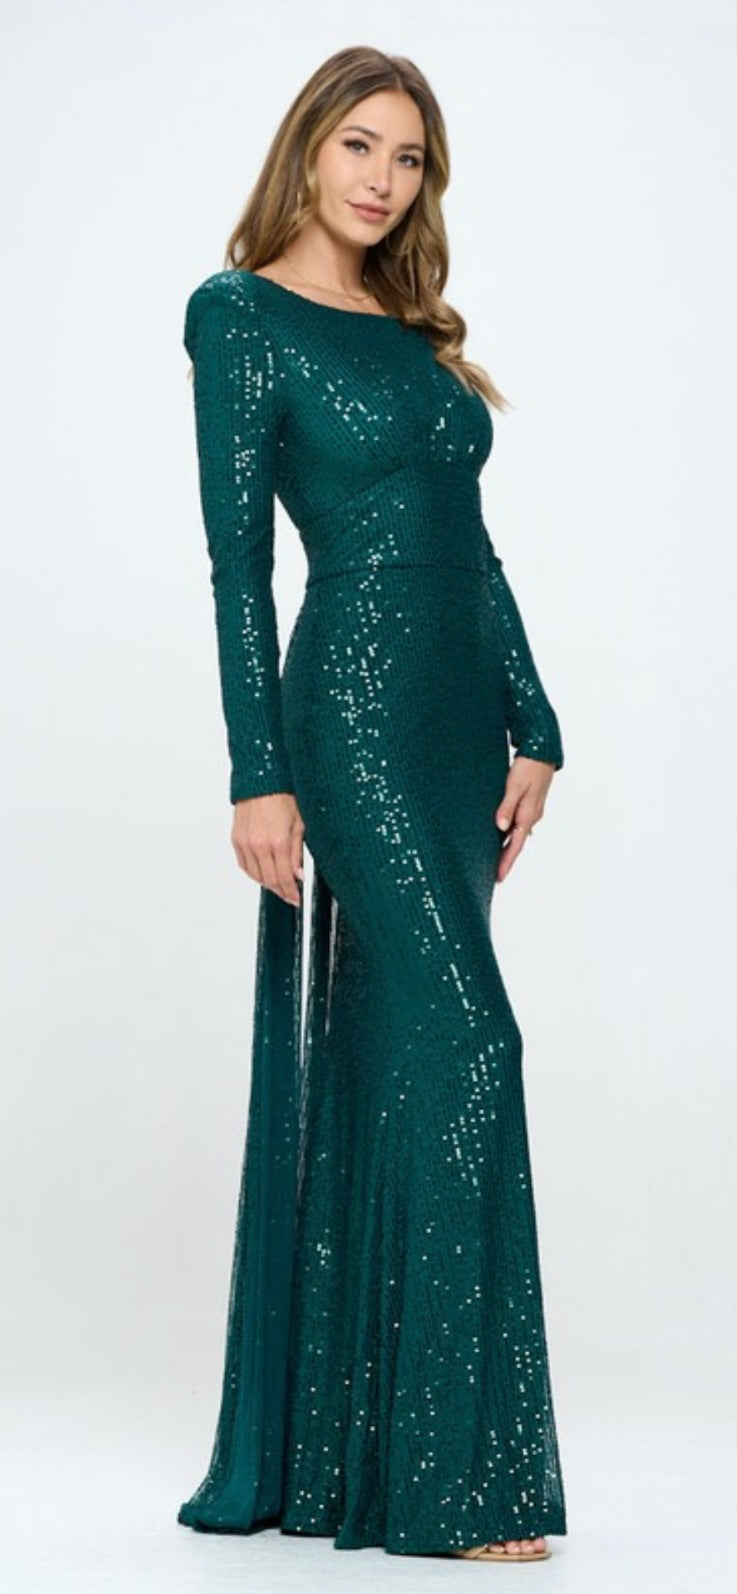 Hunter Green Sequined Dress